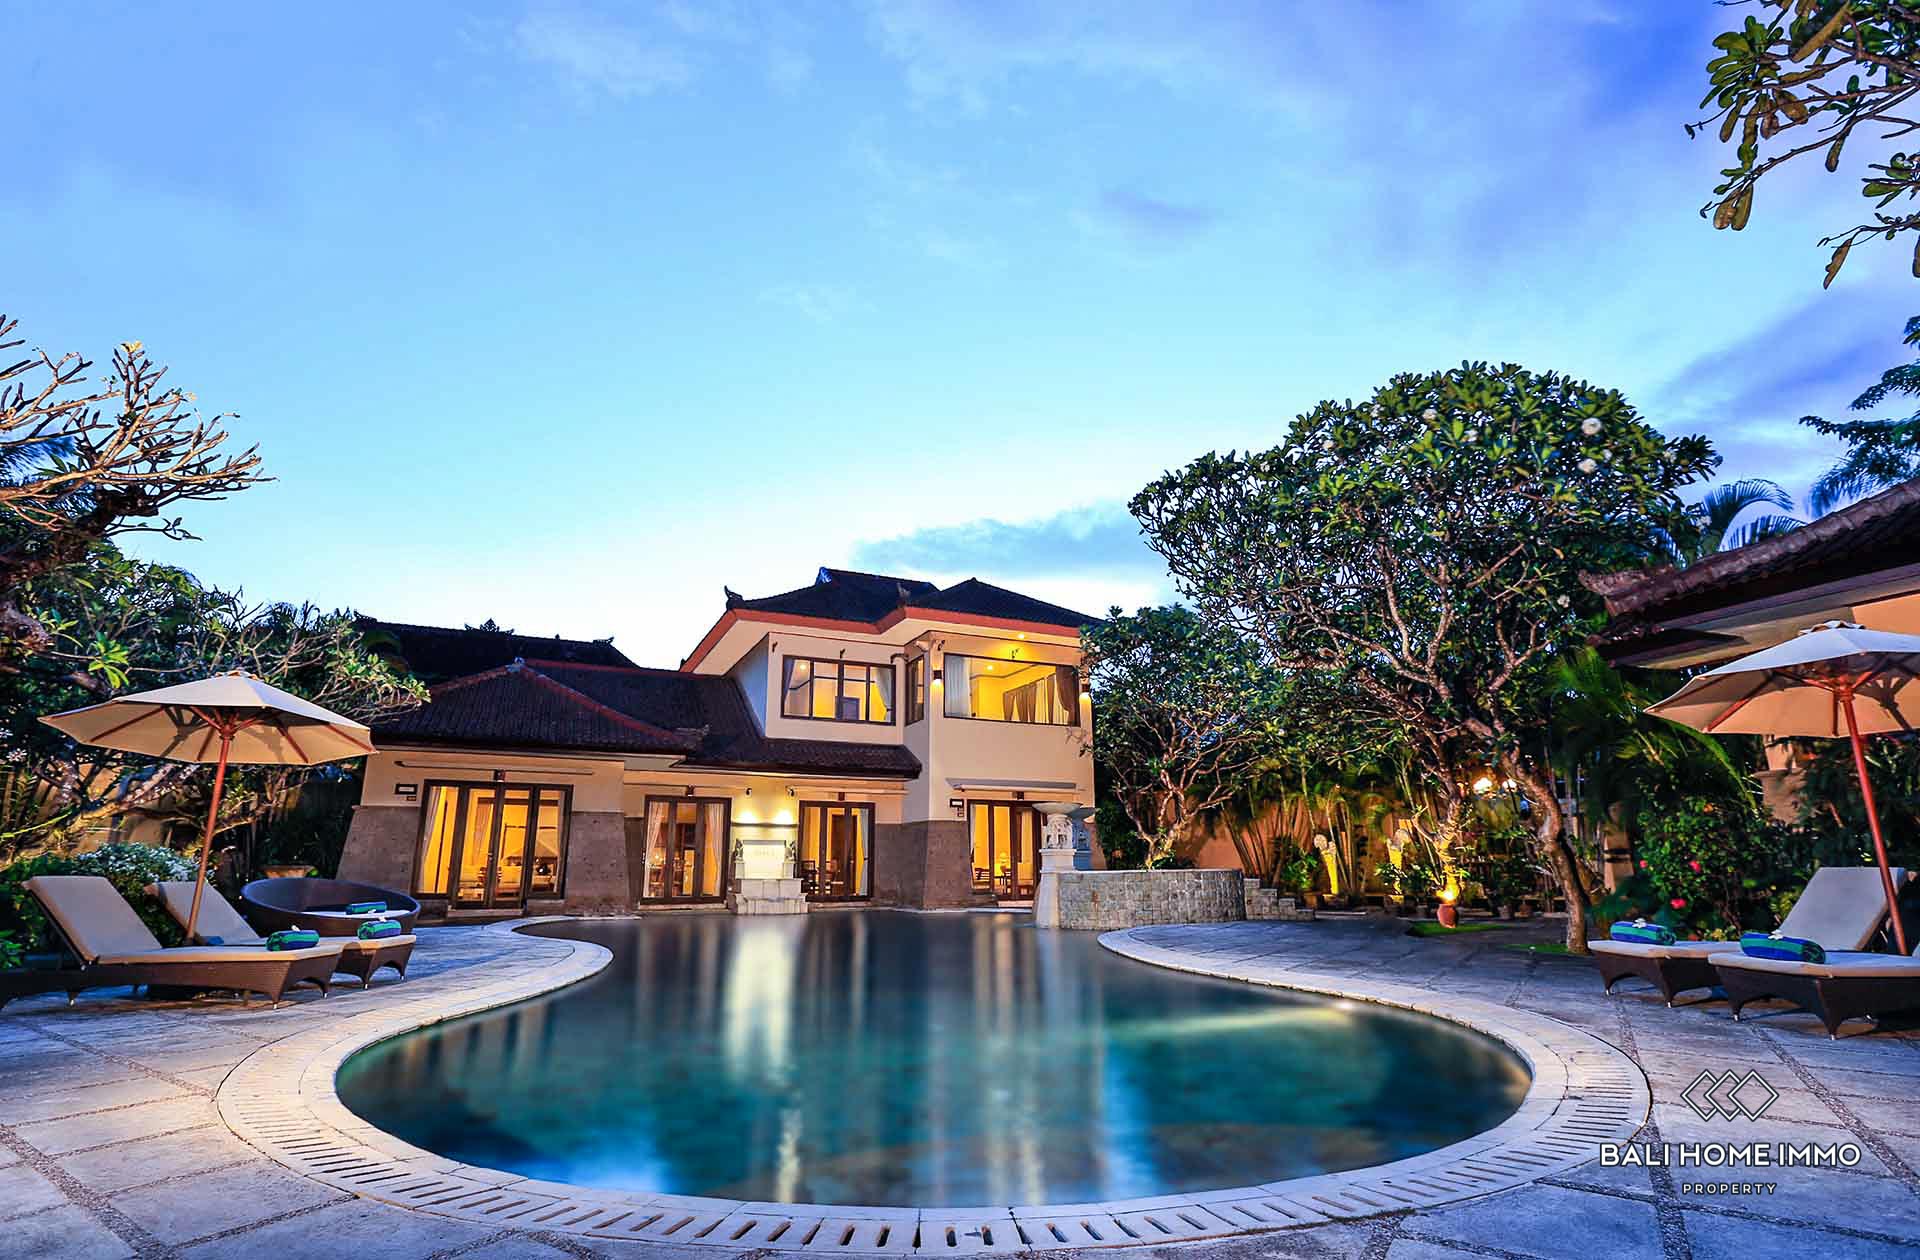 Villa Sale Freehold Spacious 7 Bedroom Villa For Sale Freehold In Bali Seminyak Al032